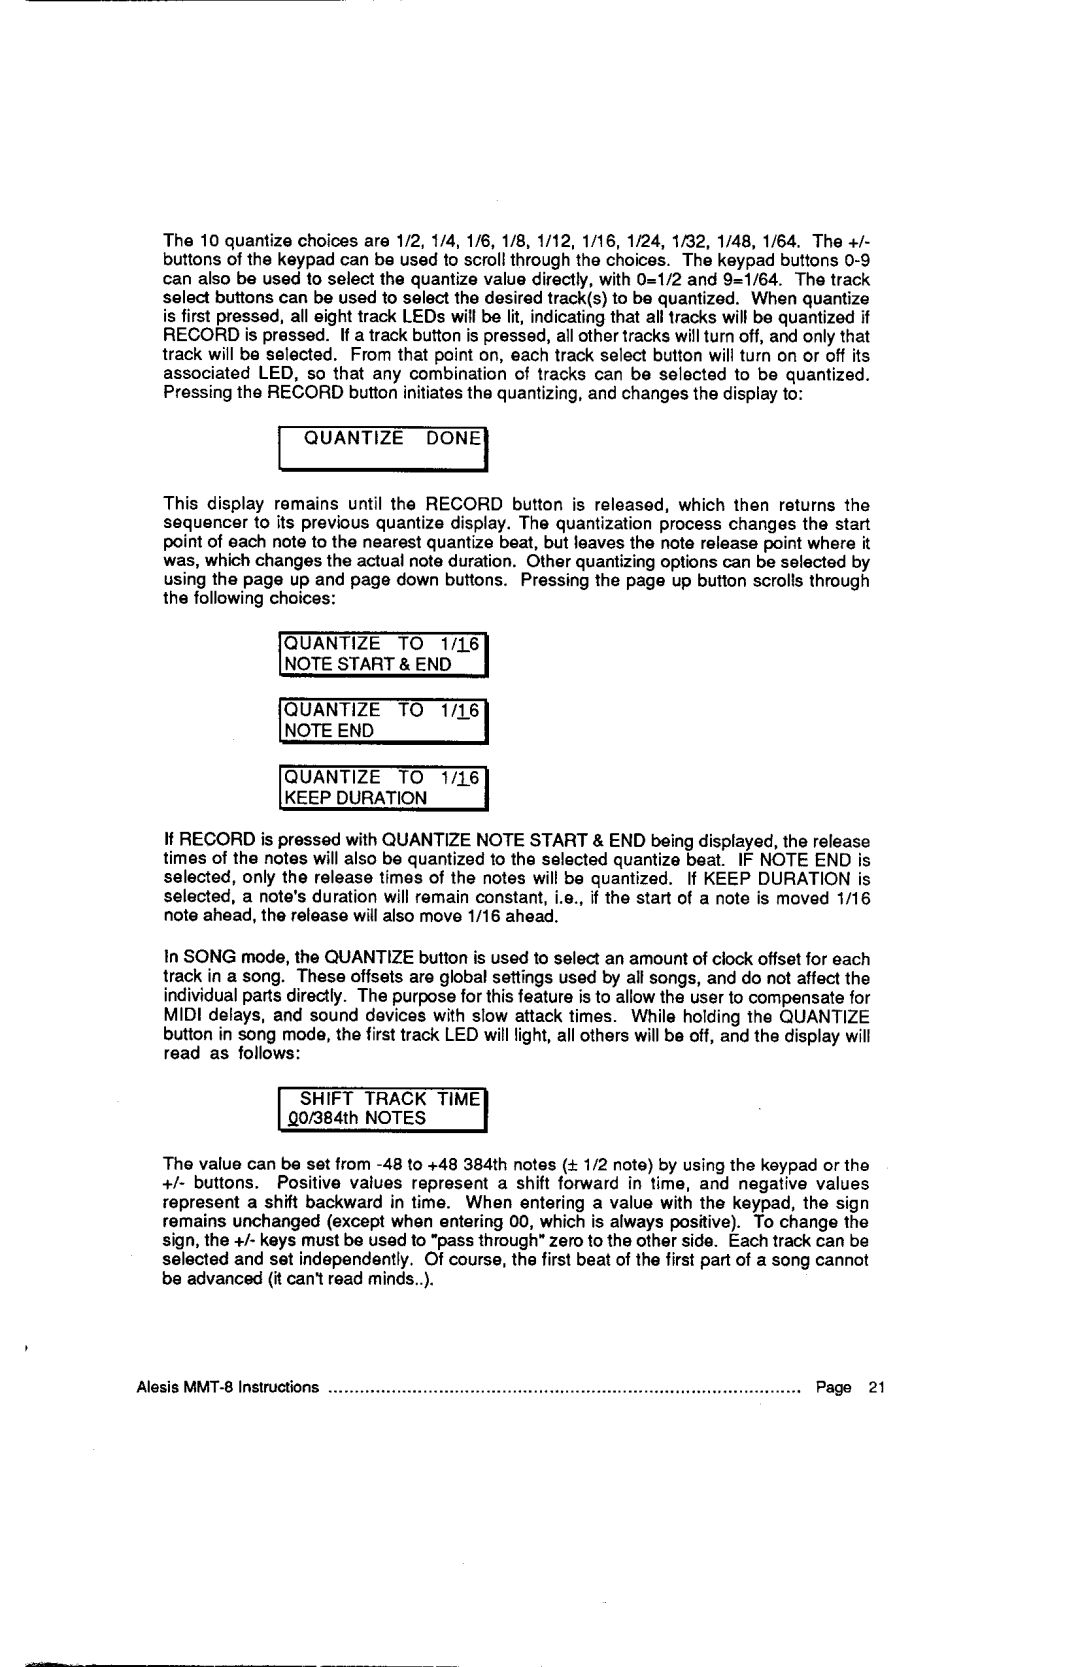 Alesis HR-16:B, MMT-8 instruction manual NOTEEND 1/L6 